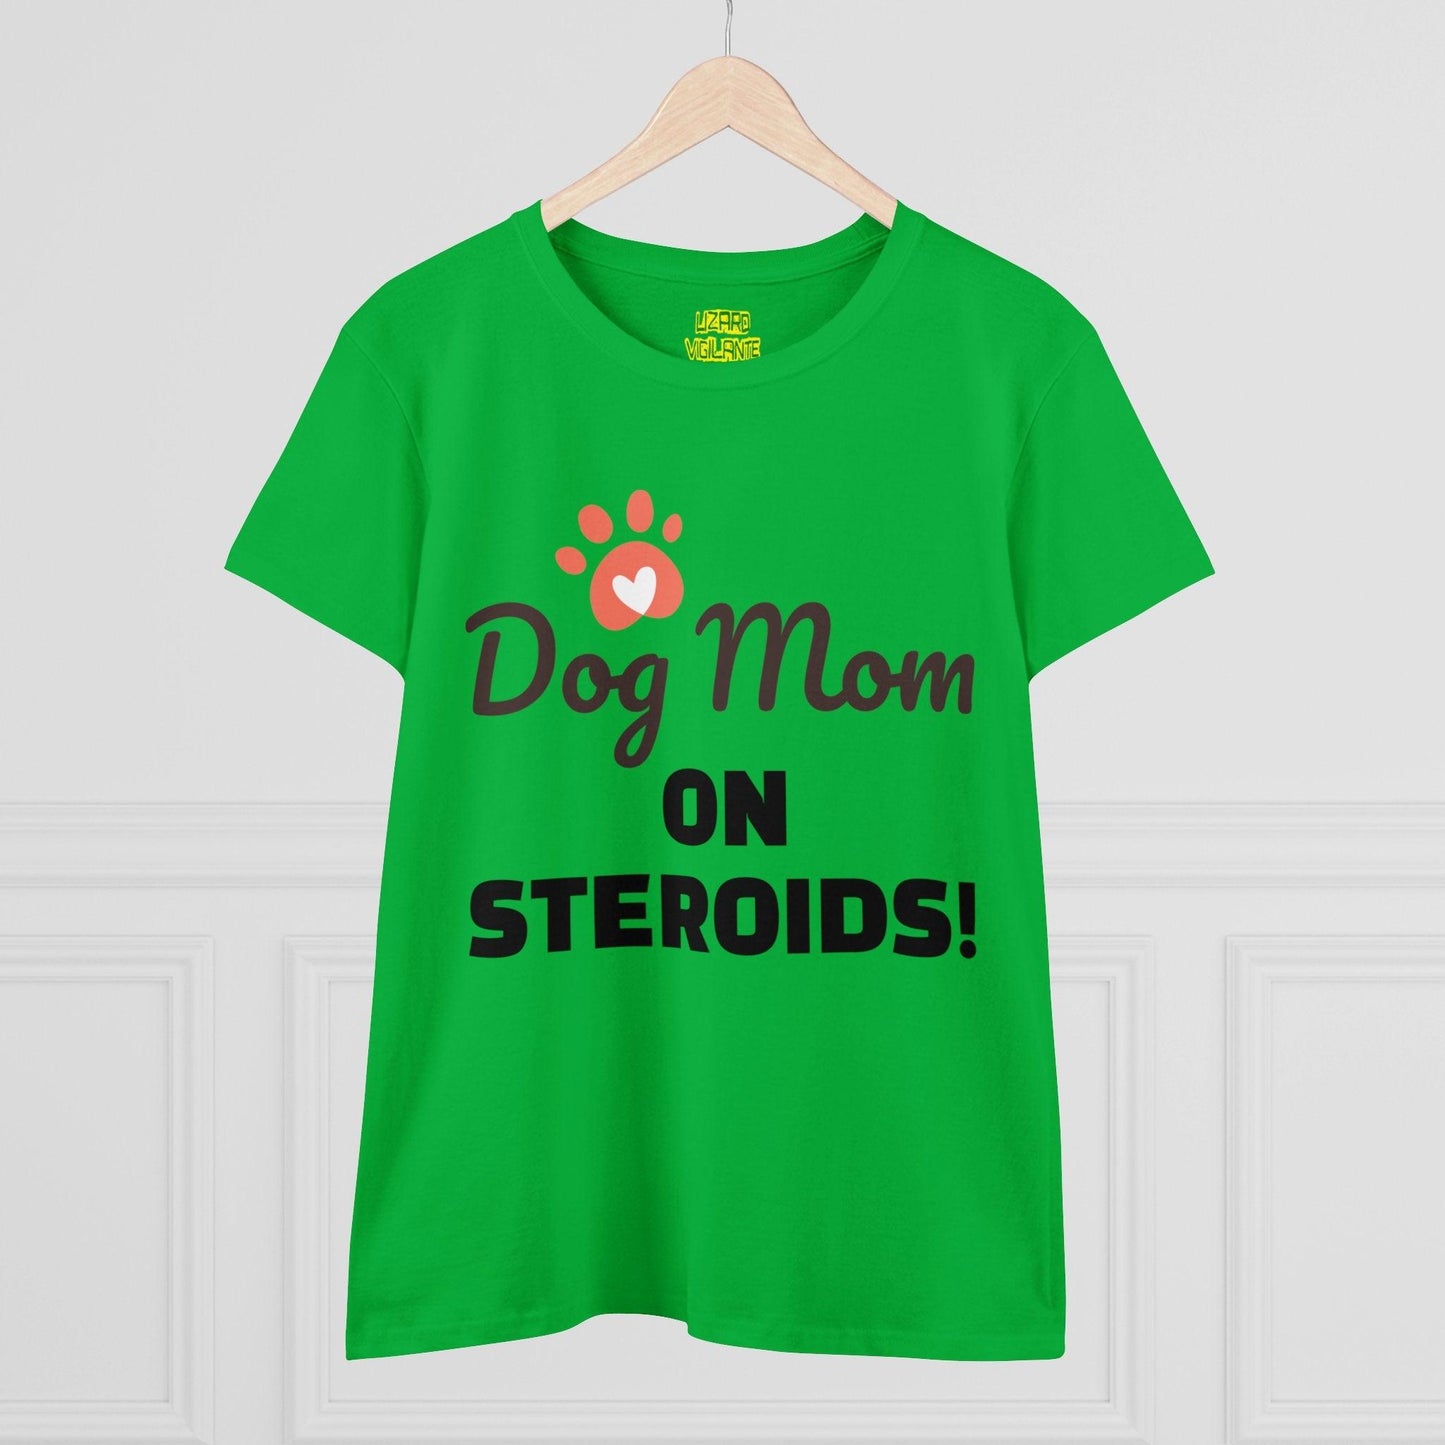 Dog Mom ON STEROIDS! Women's Midweight Cotton Tee - Lizard Vigilante